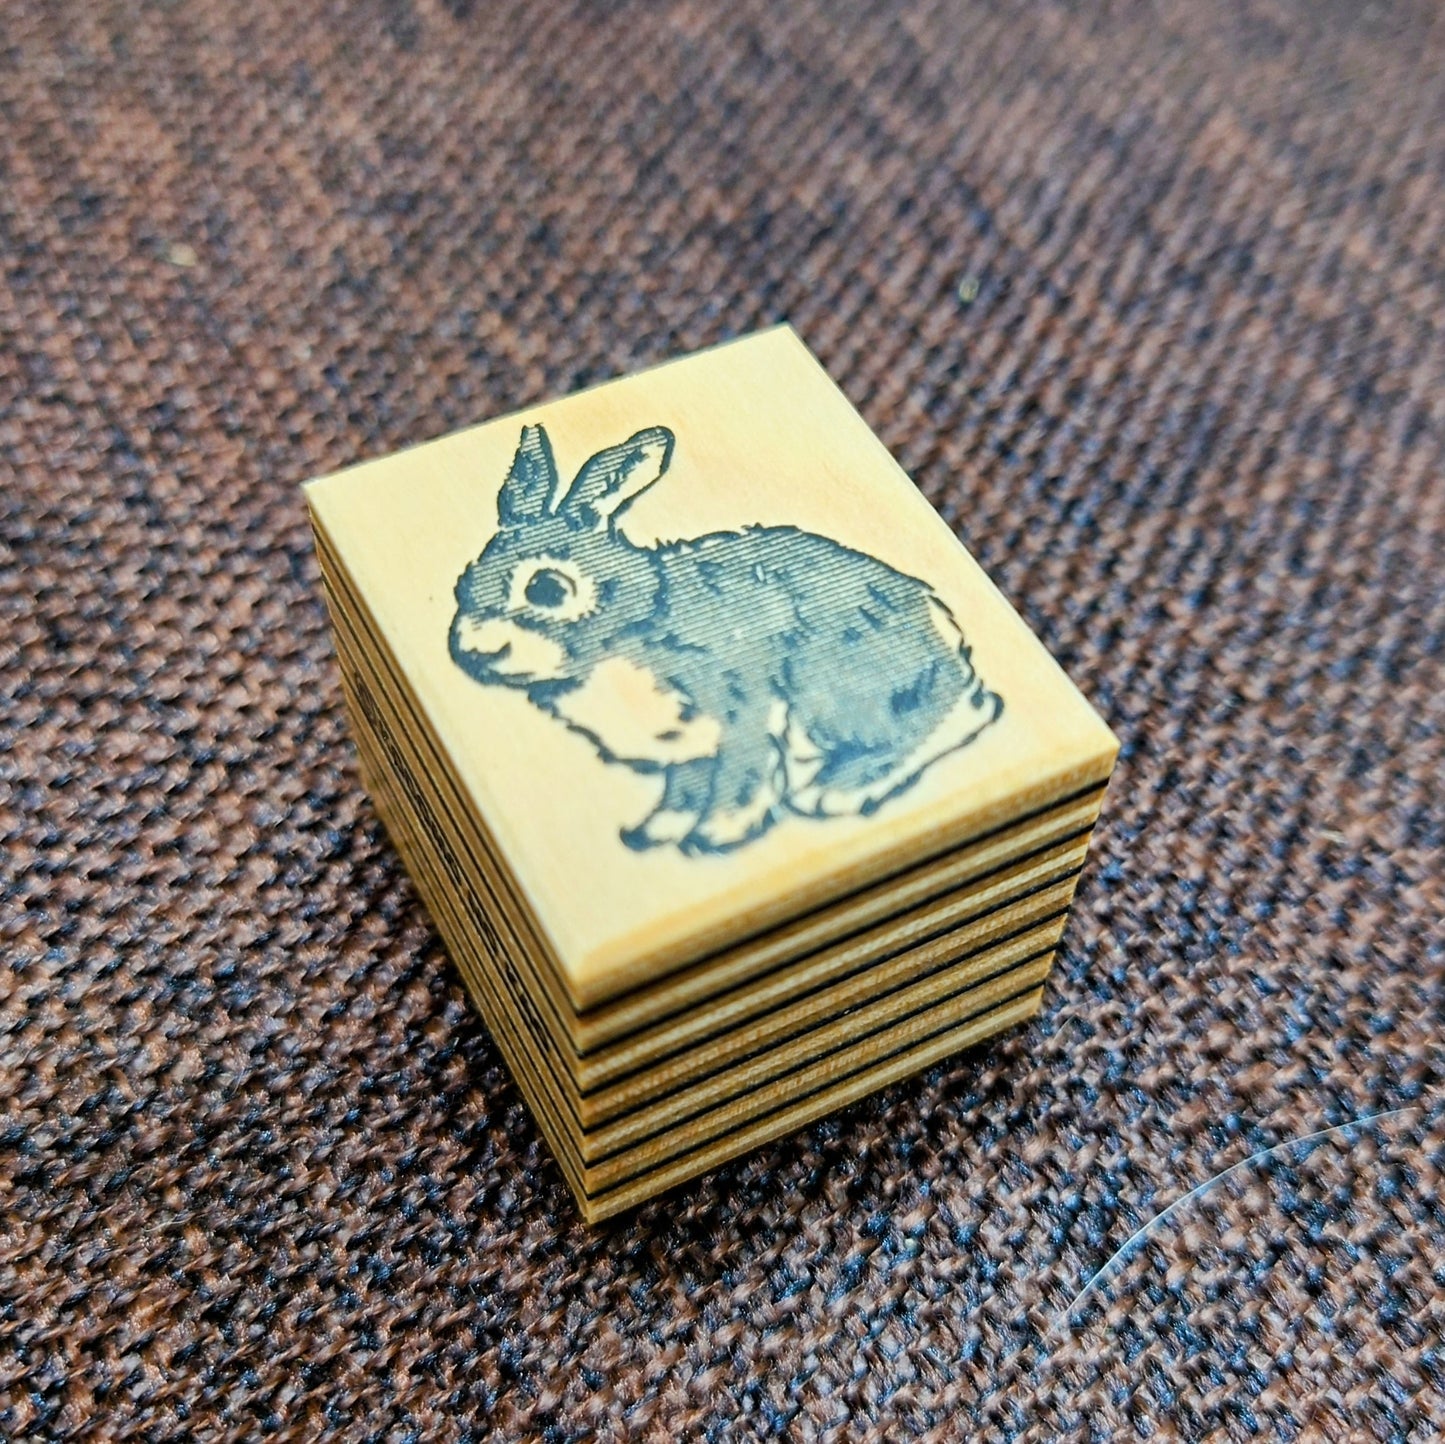 The Stamp series 兔子